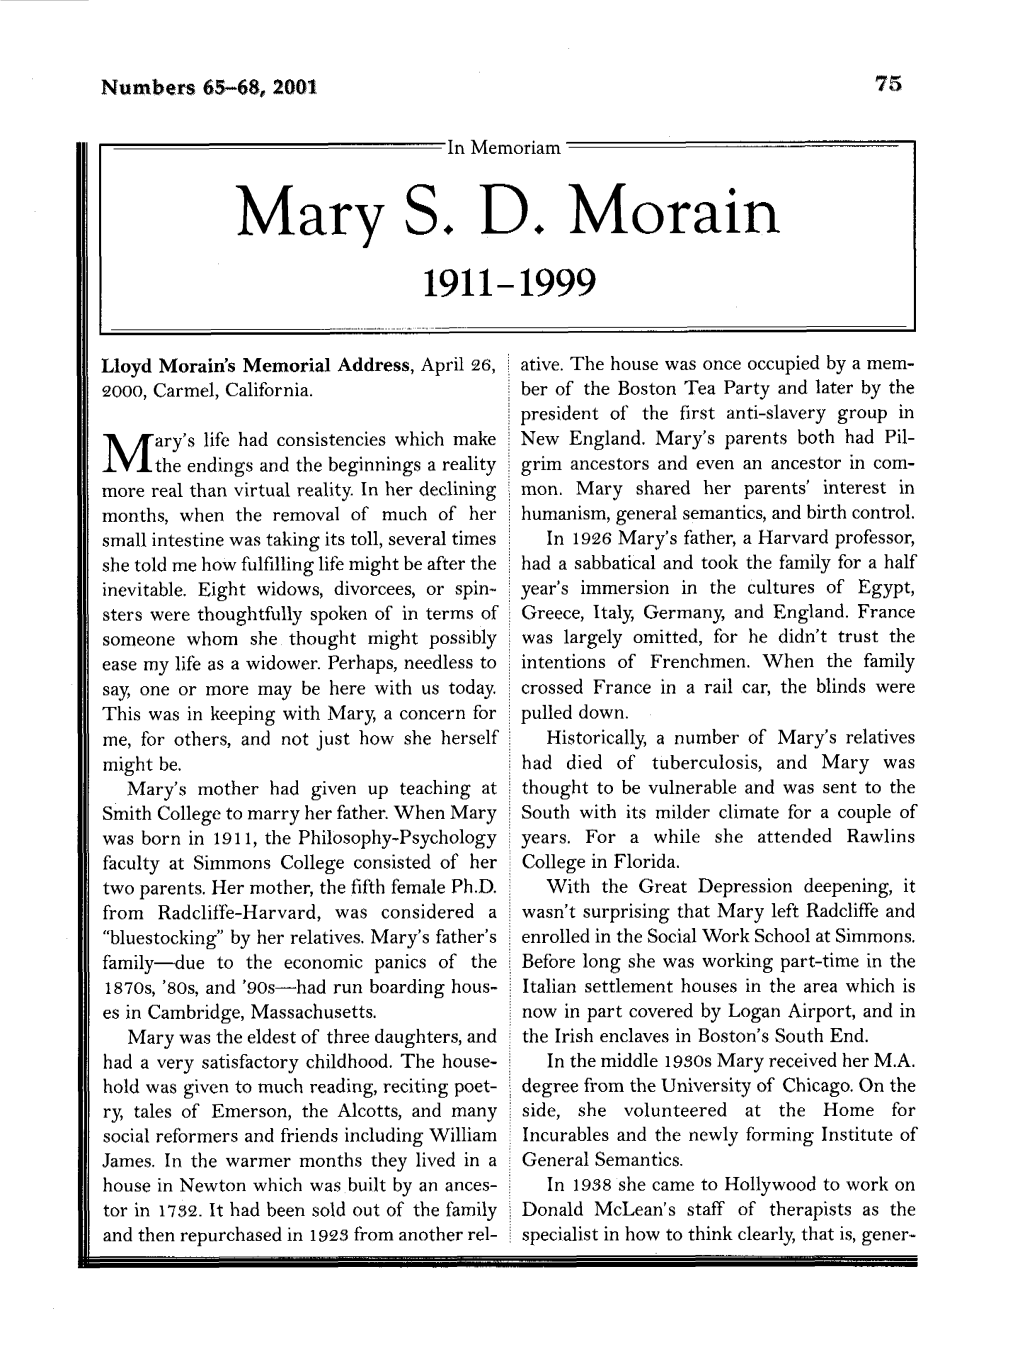 Mary S. D. Morain